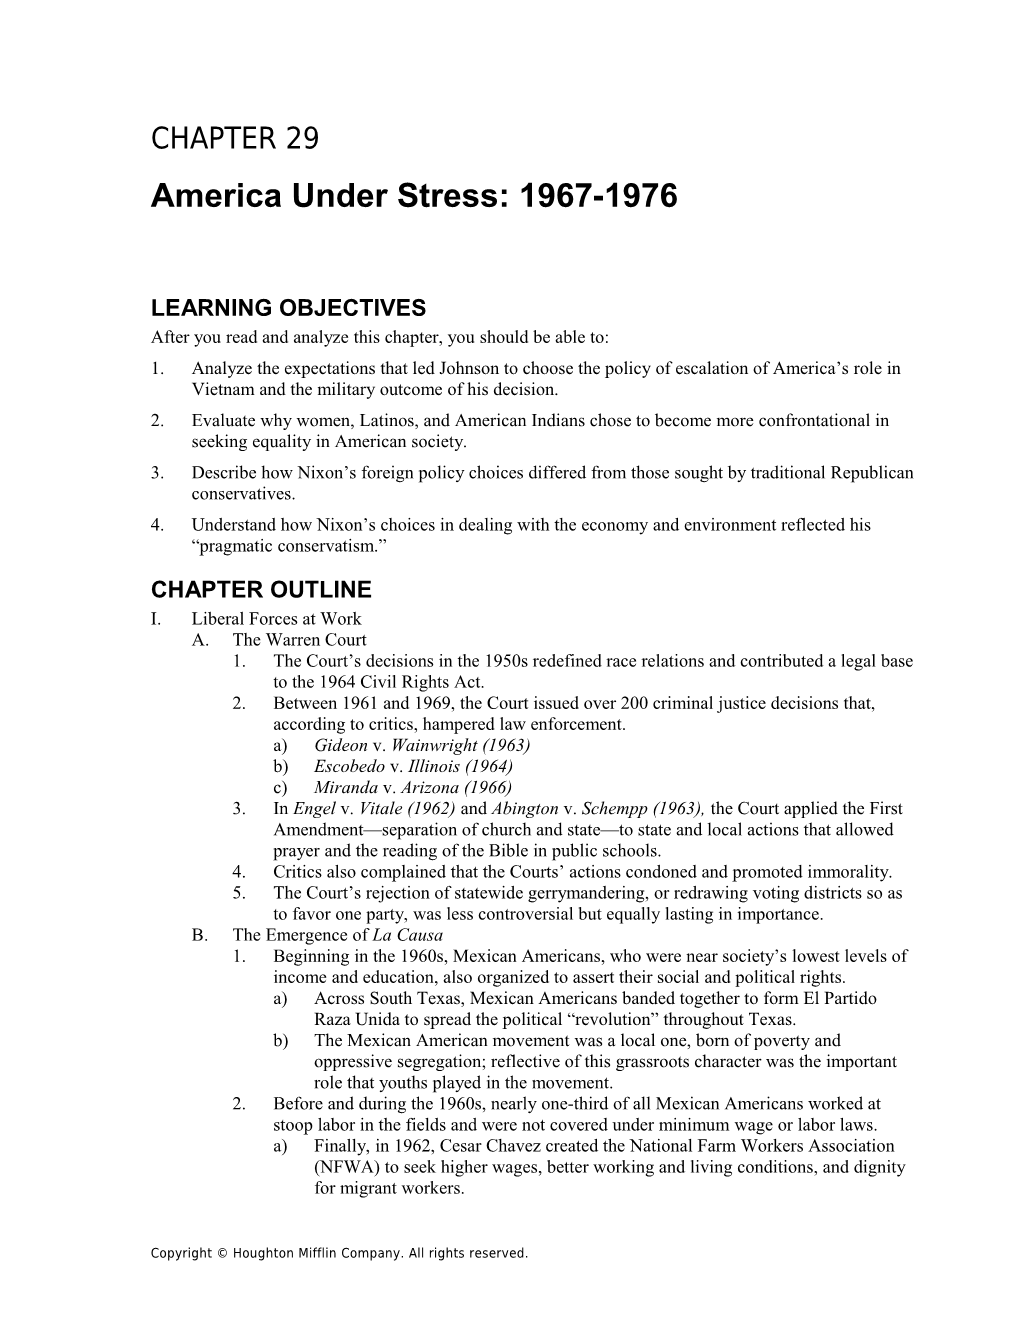 Chapter 29: America Under Stress: 1967-1976 1